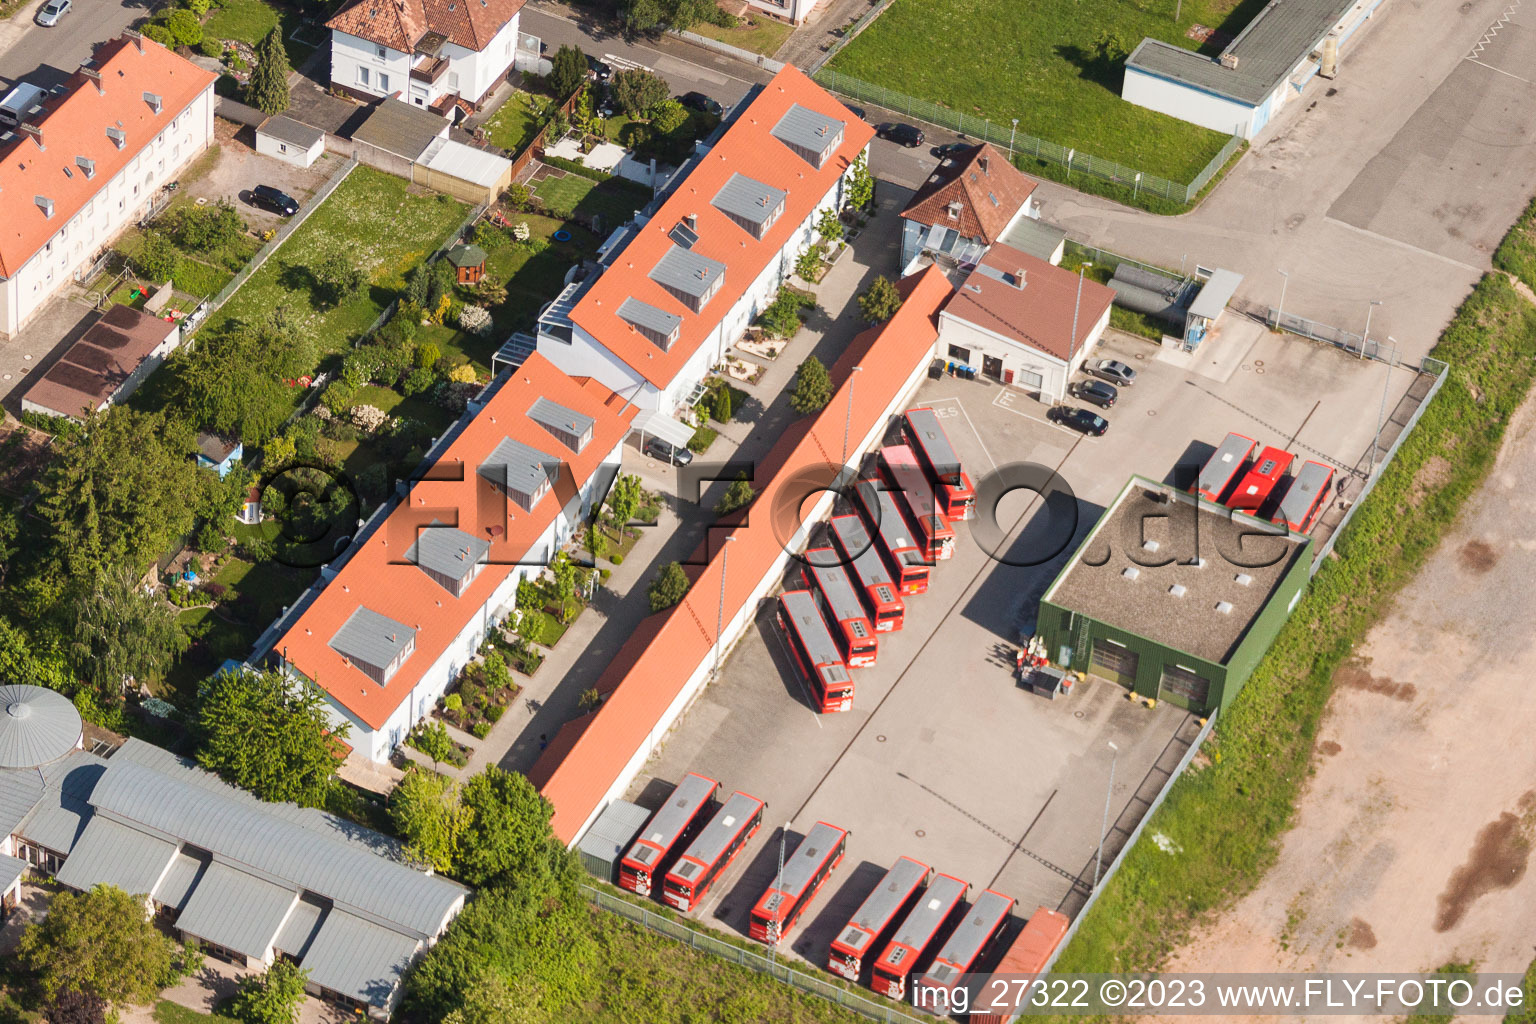 Depot of the Municipal Transport Company VRN in Landau in der Pfalz in the state Rhineland-Palatinate, Germany